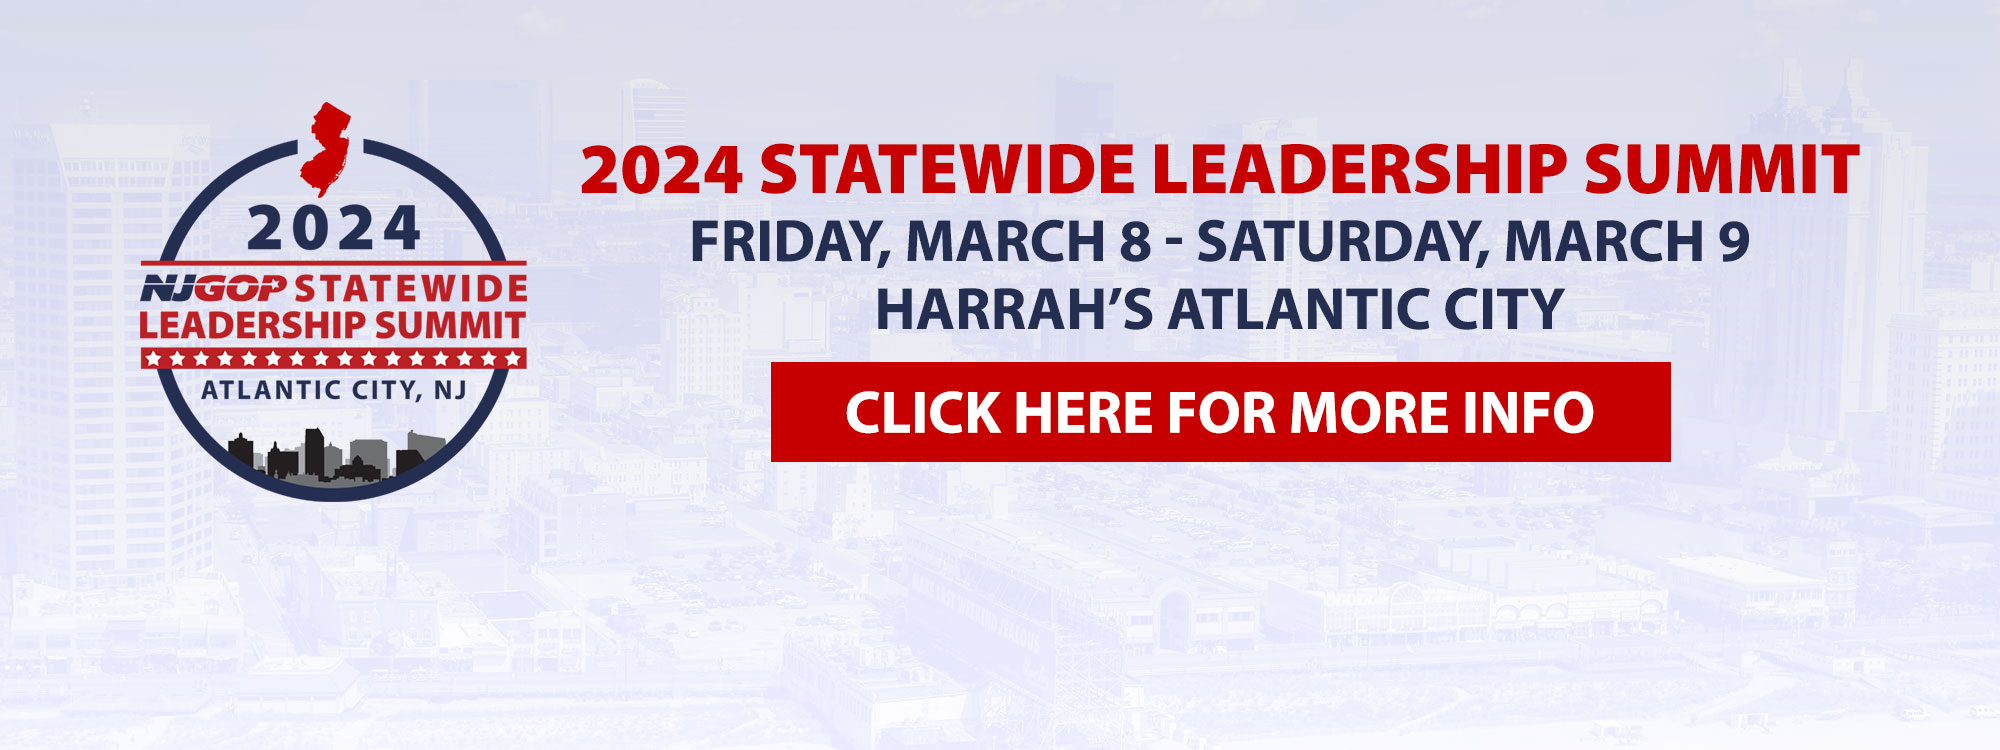 2024 Statewide Leadership Summit